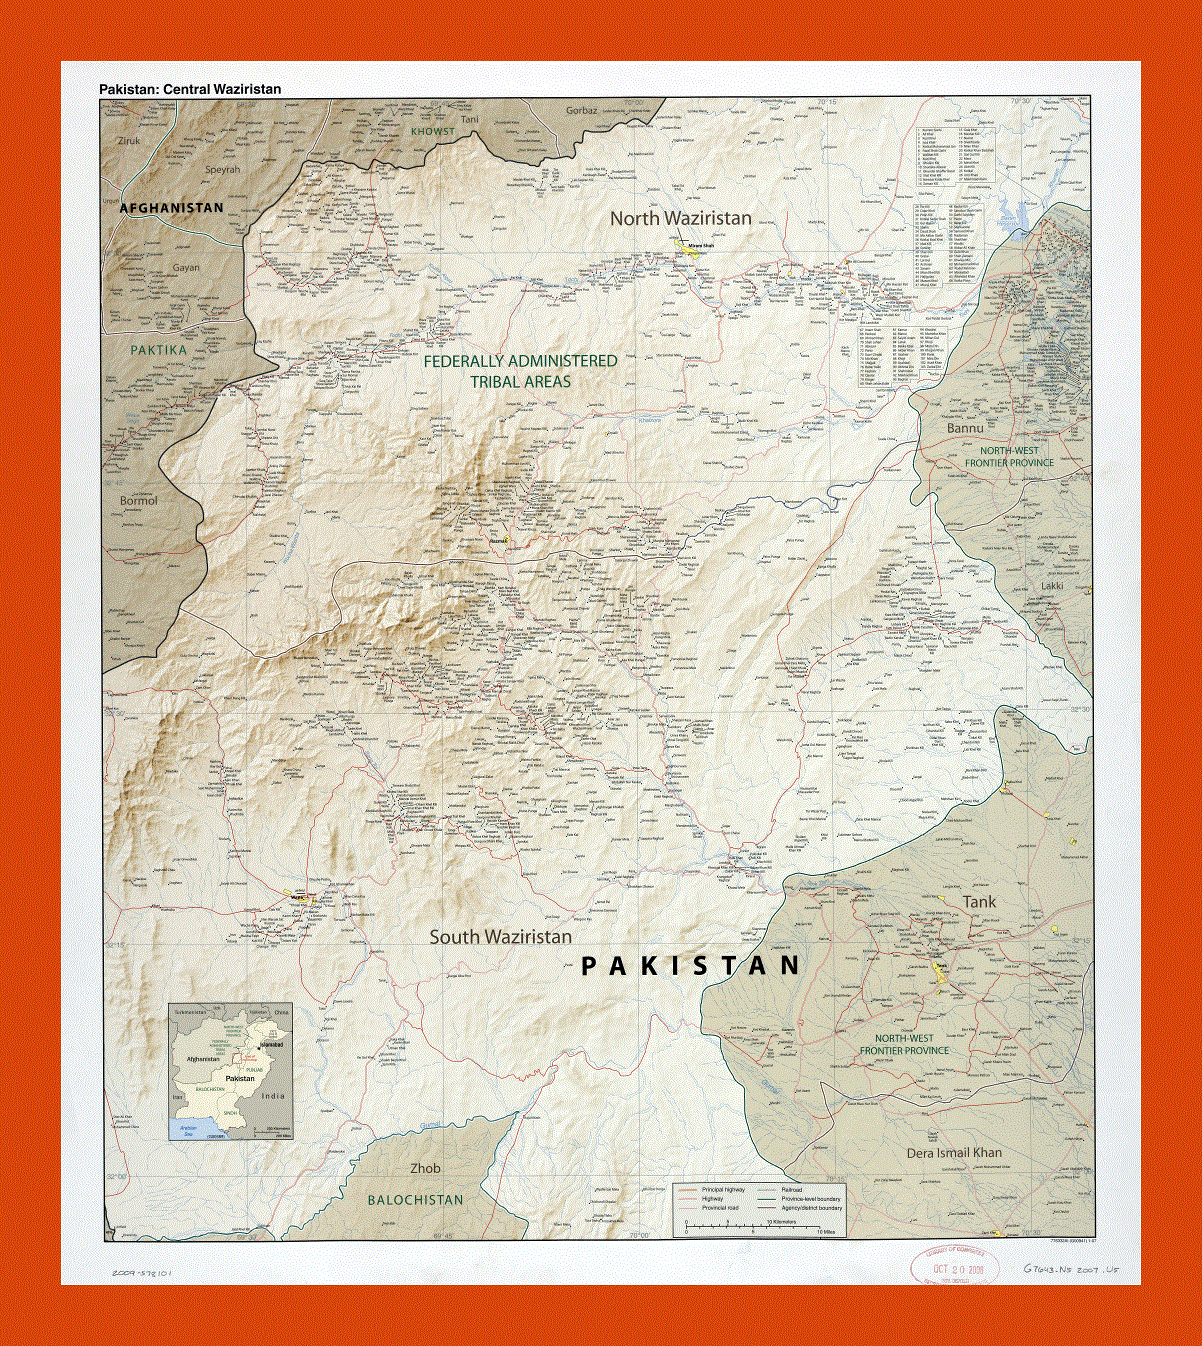 Map of Pakistan (Central Waziristan) - 2007